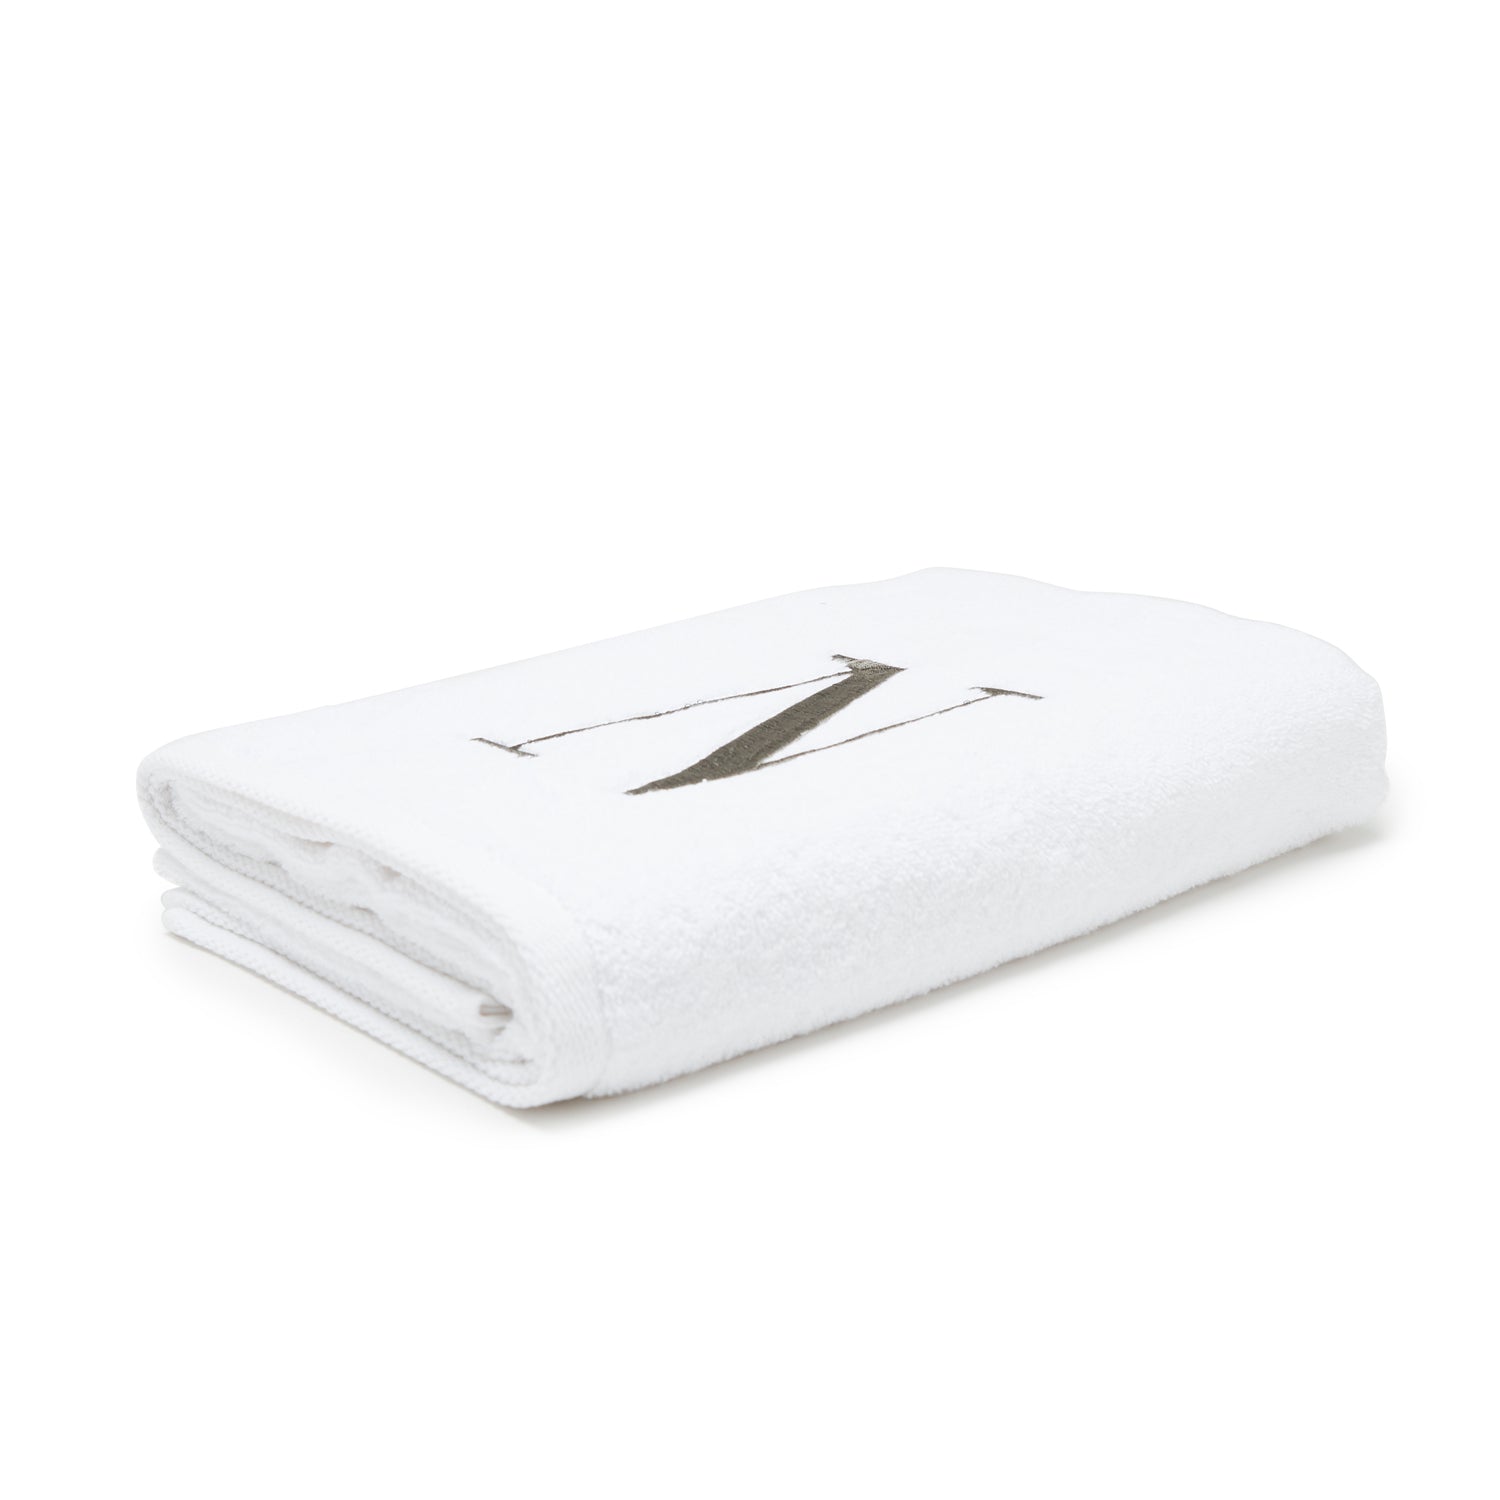 Avanti Monogram Block Letter N Hand Towel - WHITE AND SILVER